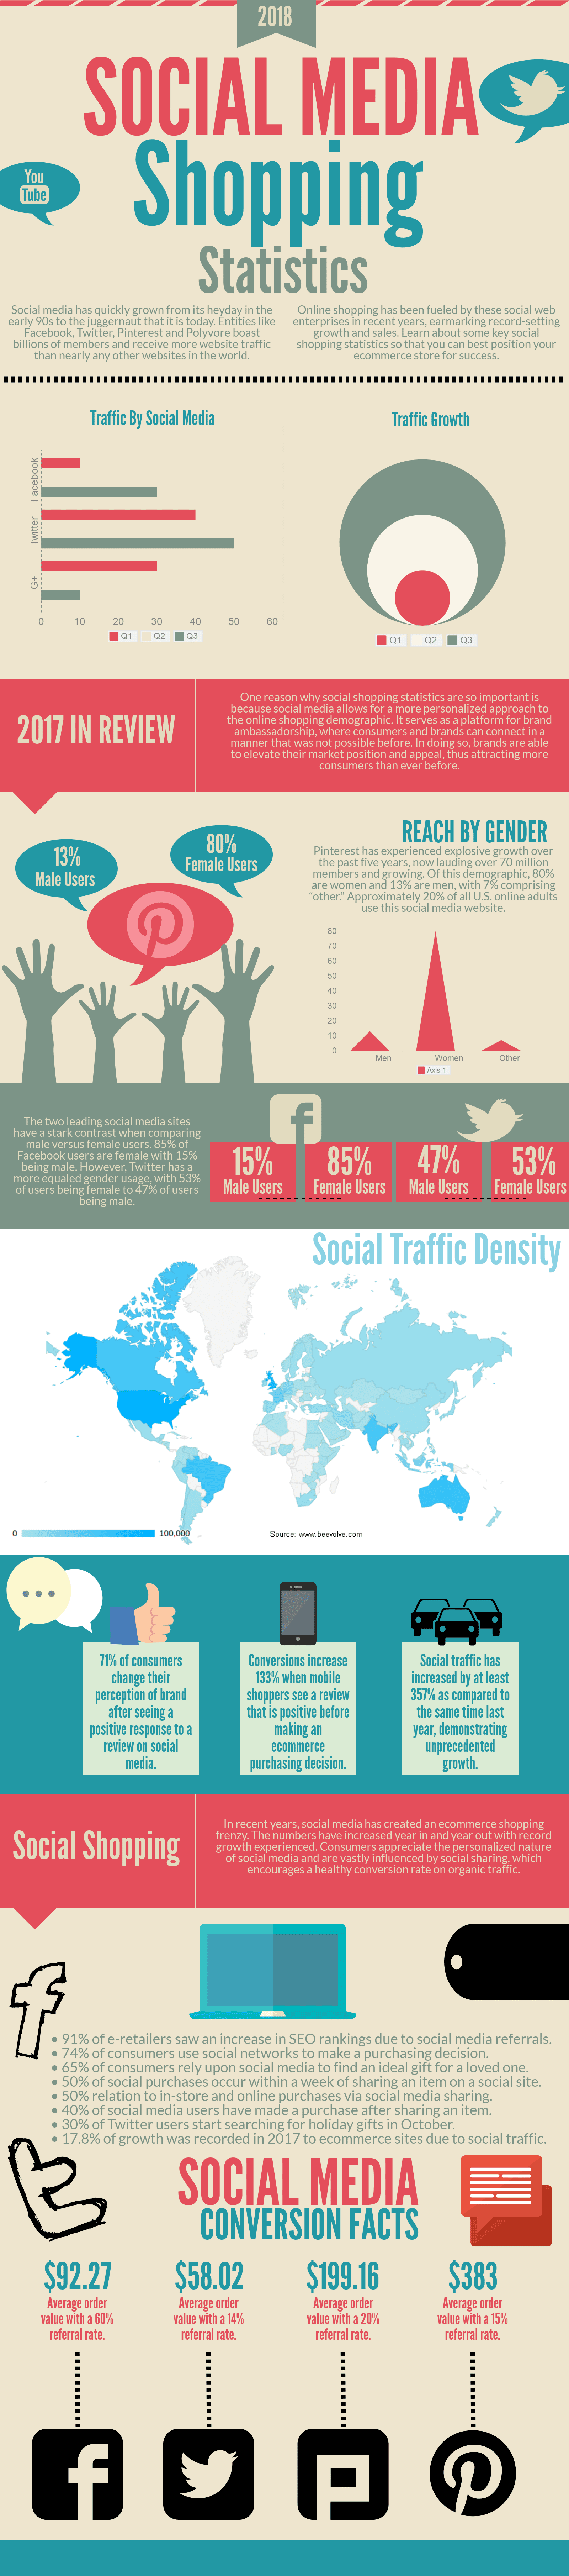 Social Media Shopping Statistics #infographic